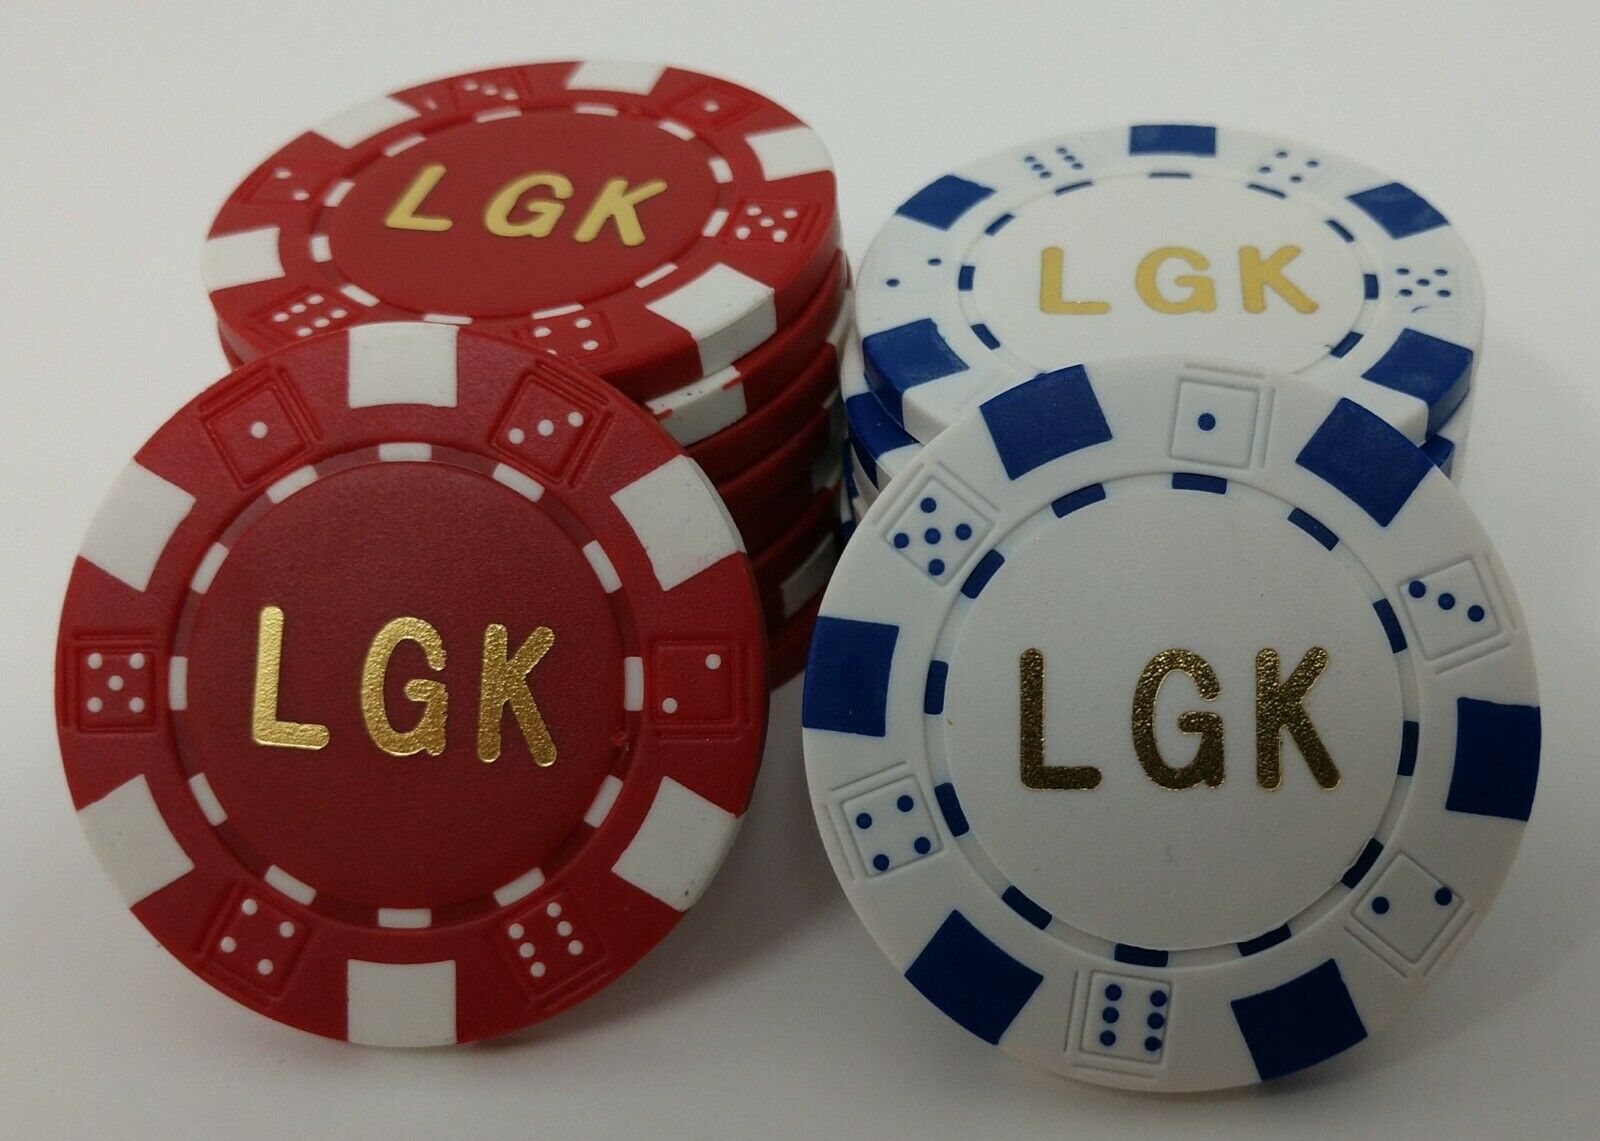 1200 Custom Monogrammed Poker Chips - Printed on both sides